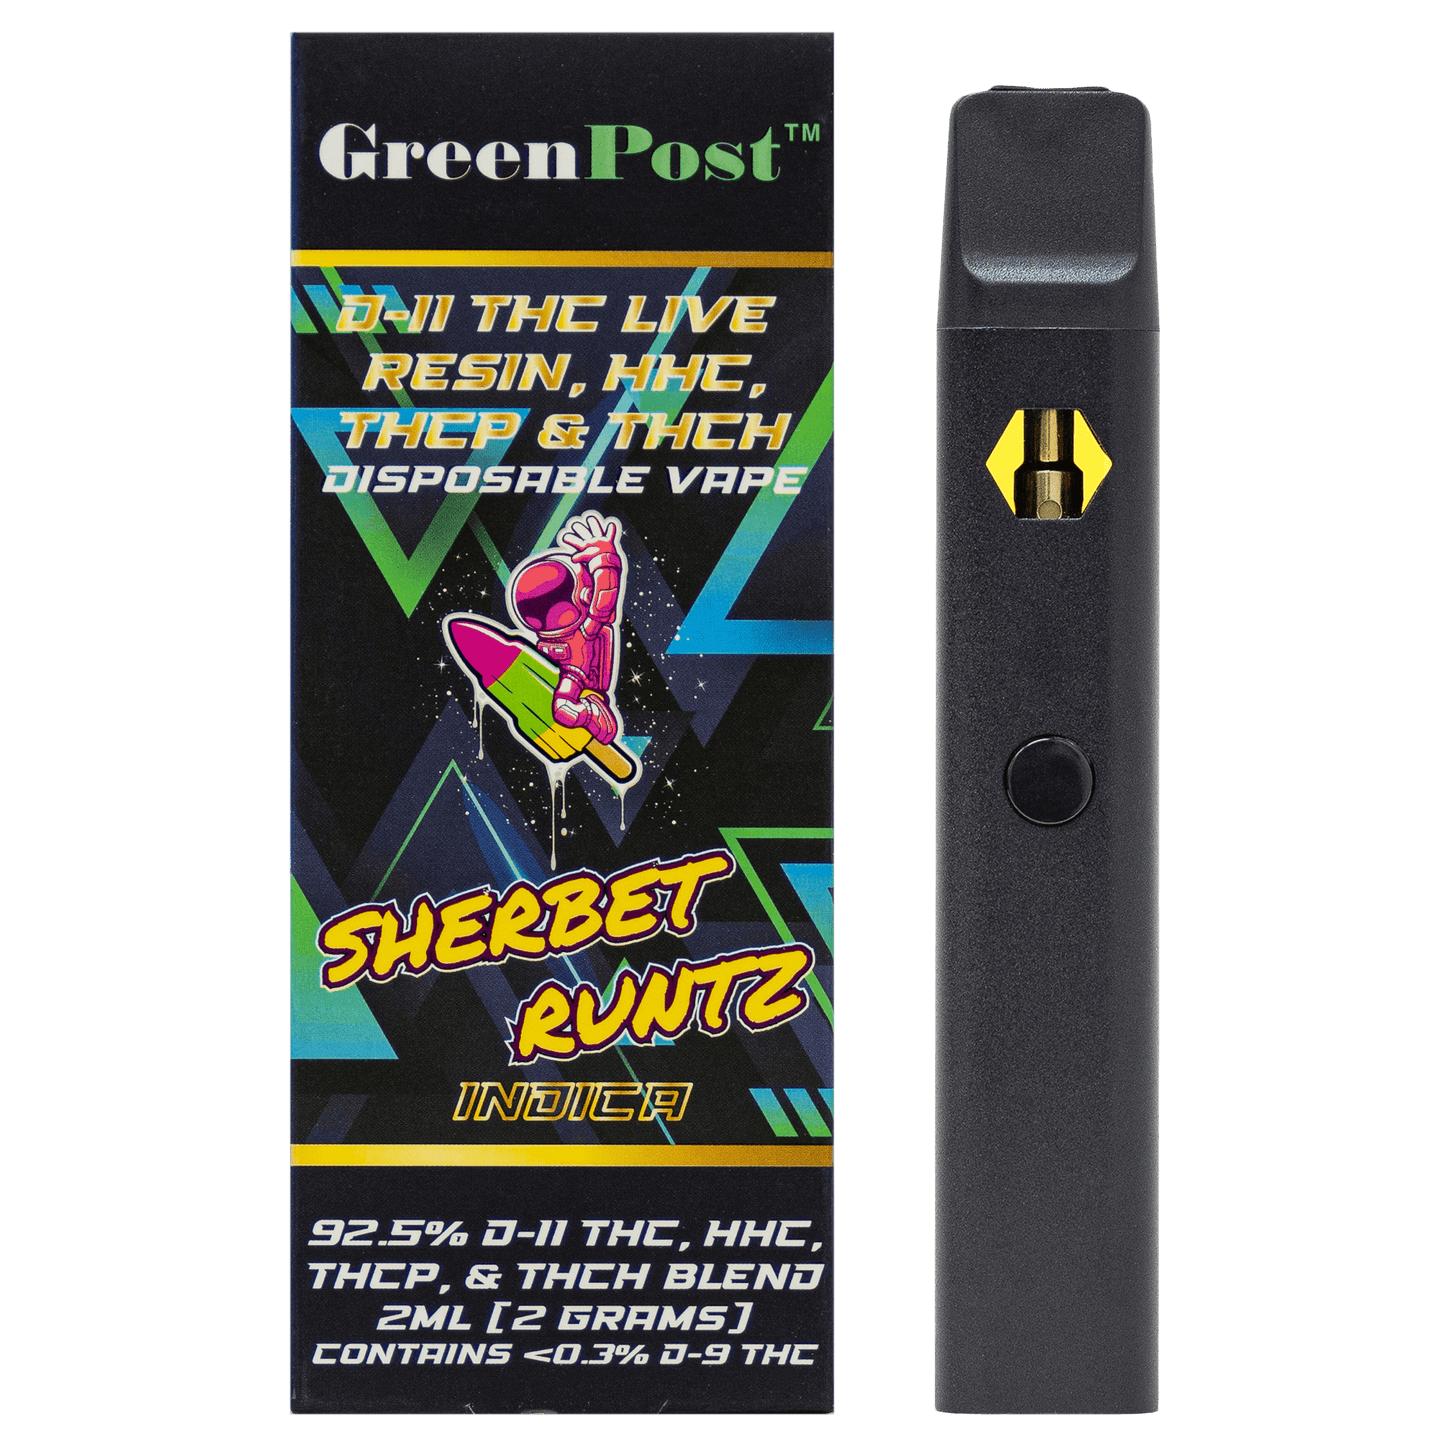 Delta 11 THC Live Resin Blend Disposable Pen - Sherbet Runtz (Indica) - GreenPost CBD - www.GreenPostCBD.com